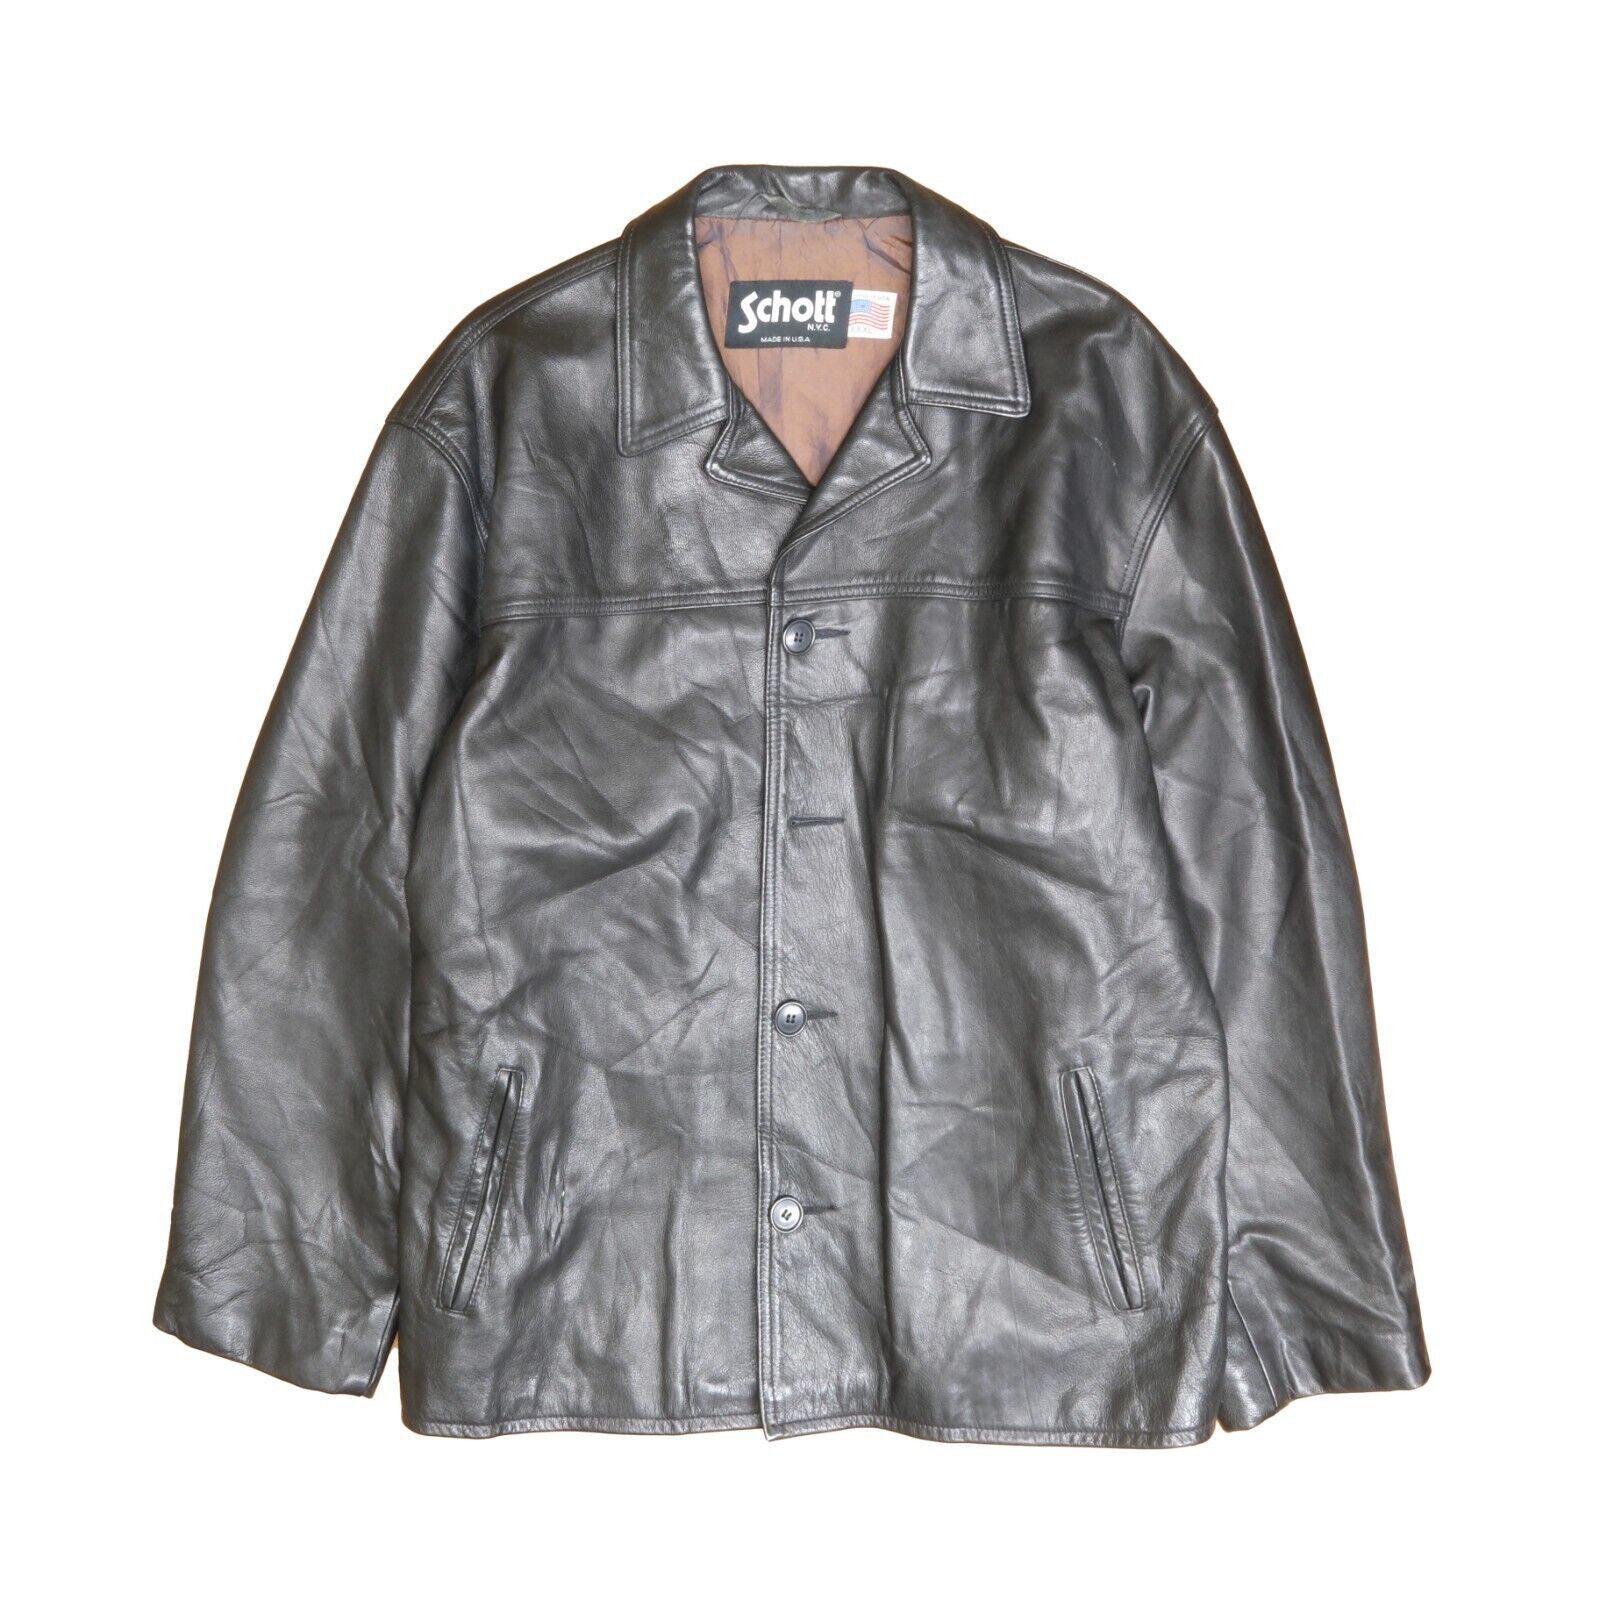 Vintage Schott NYC Leather Coat Jacket Size 3XL Made USA 90s